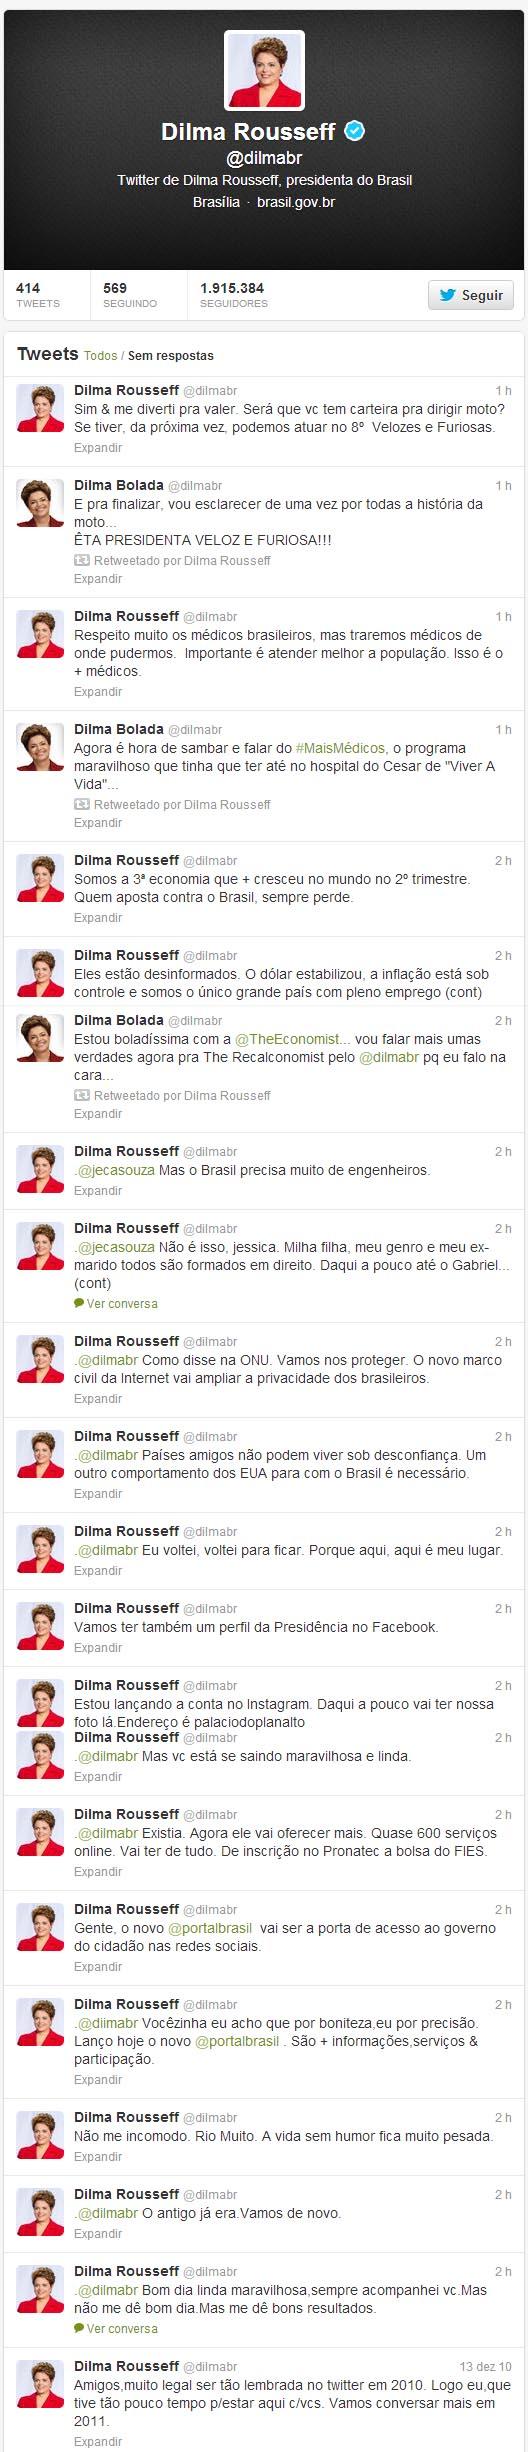 Dilma rousseff dilma bolada